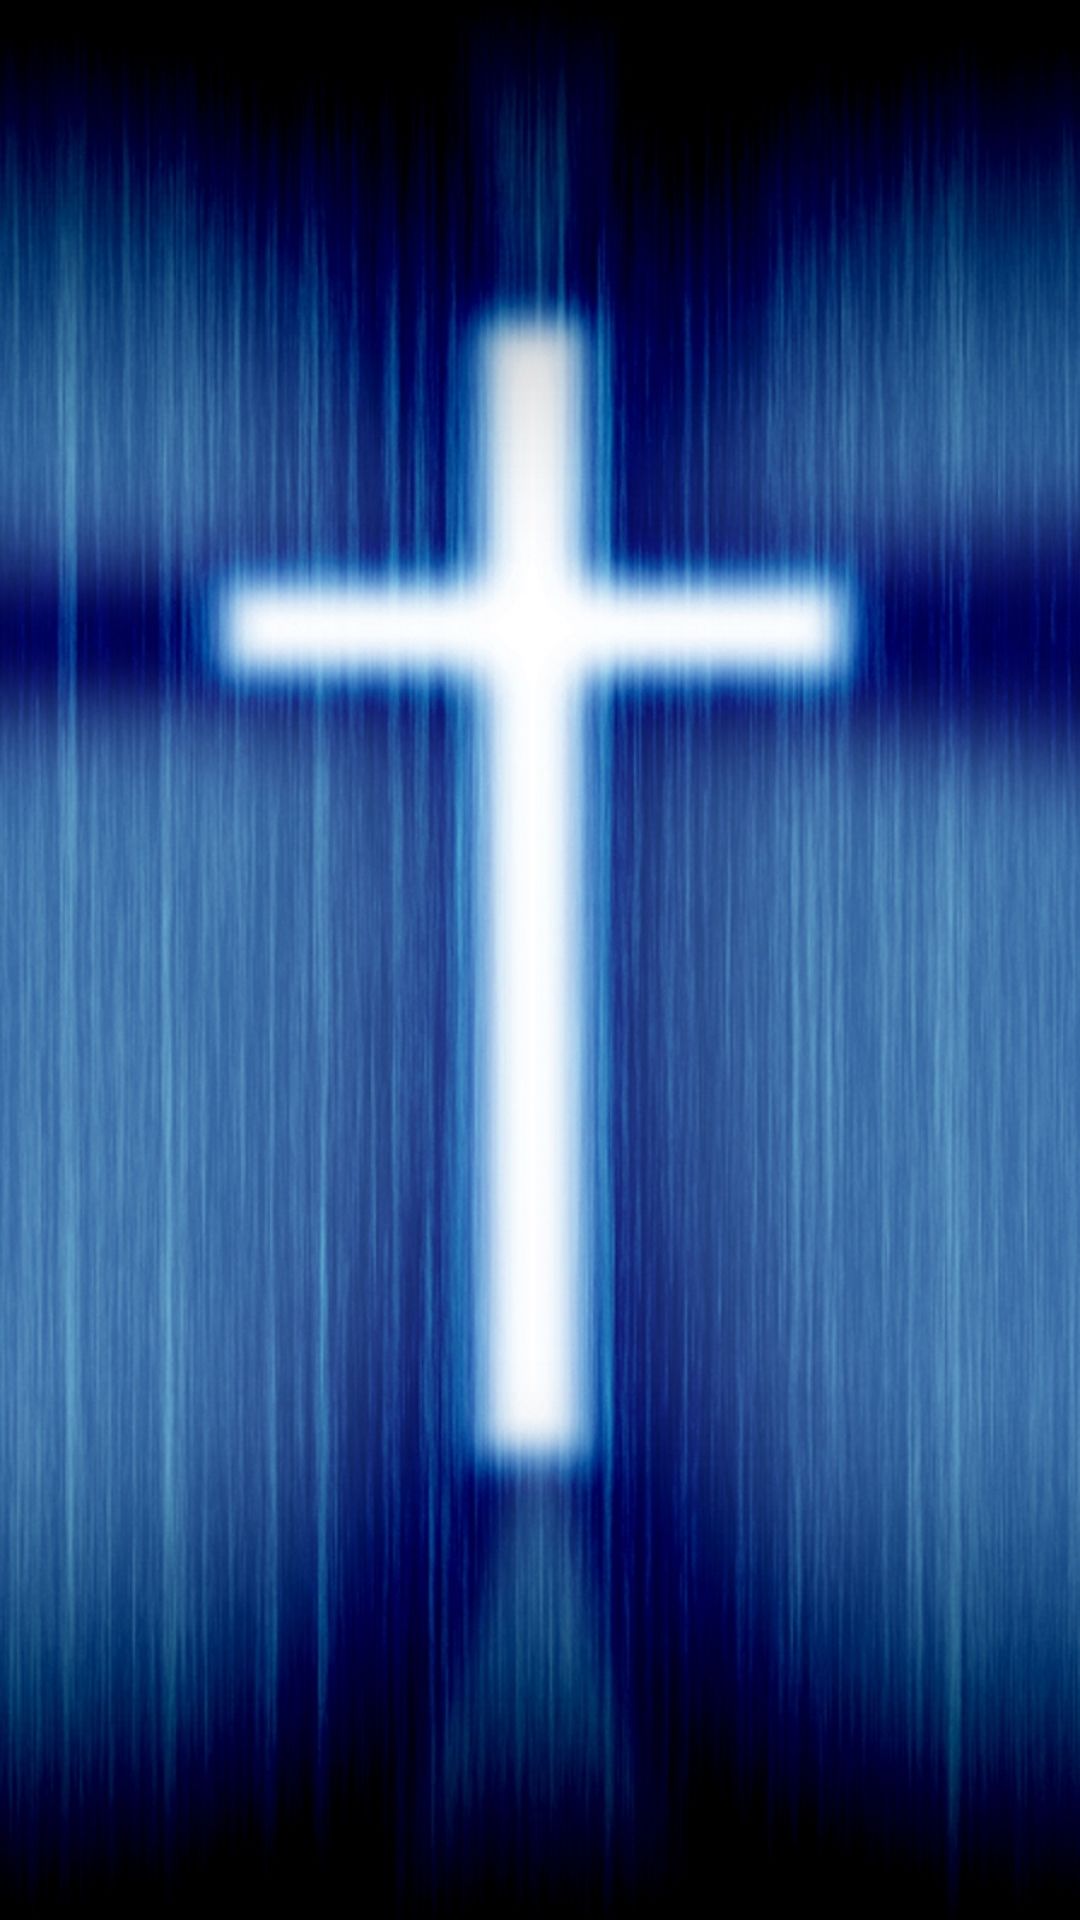 IPhone 6S Plus - Religious / Christian - Wallpaper ID 34843